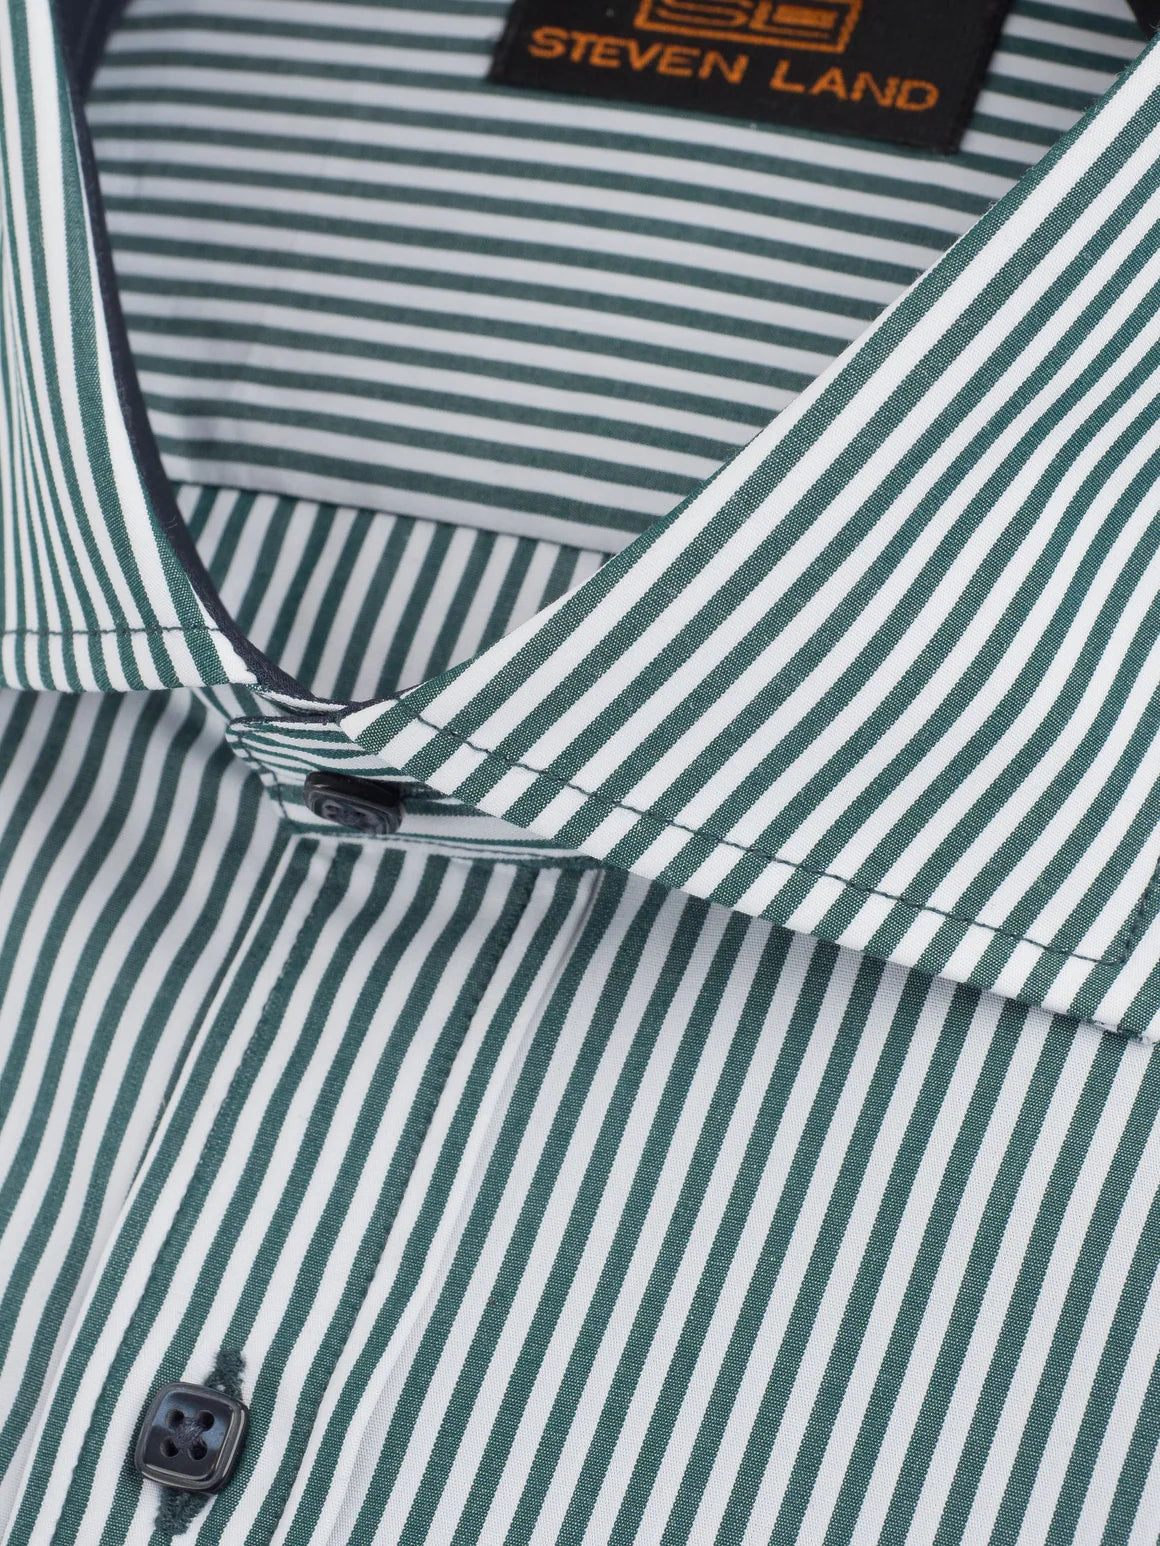 Steven Land Mens Classic Fit Green & White Striped 100% Cotton Dress Shirt